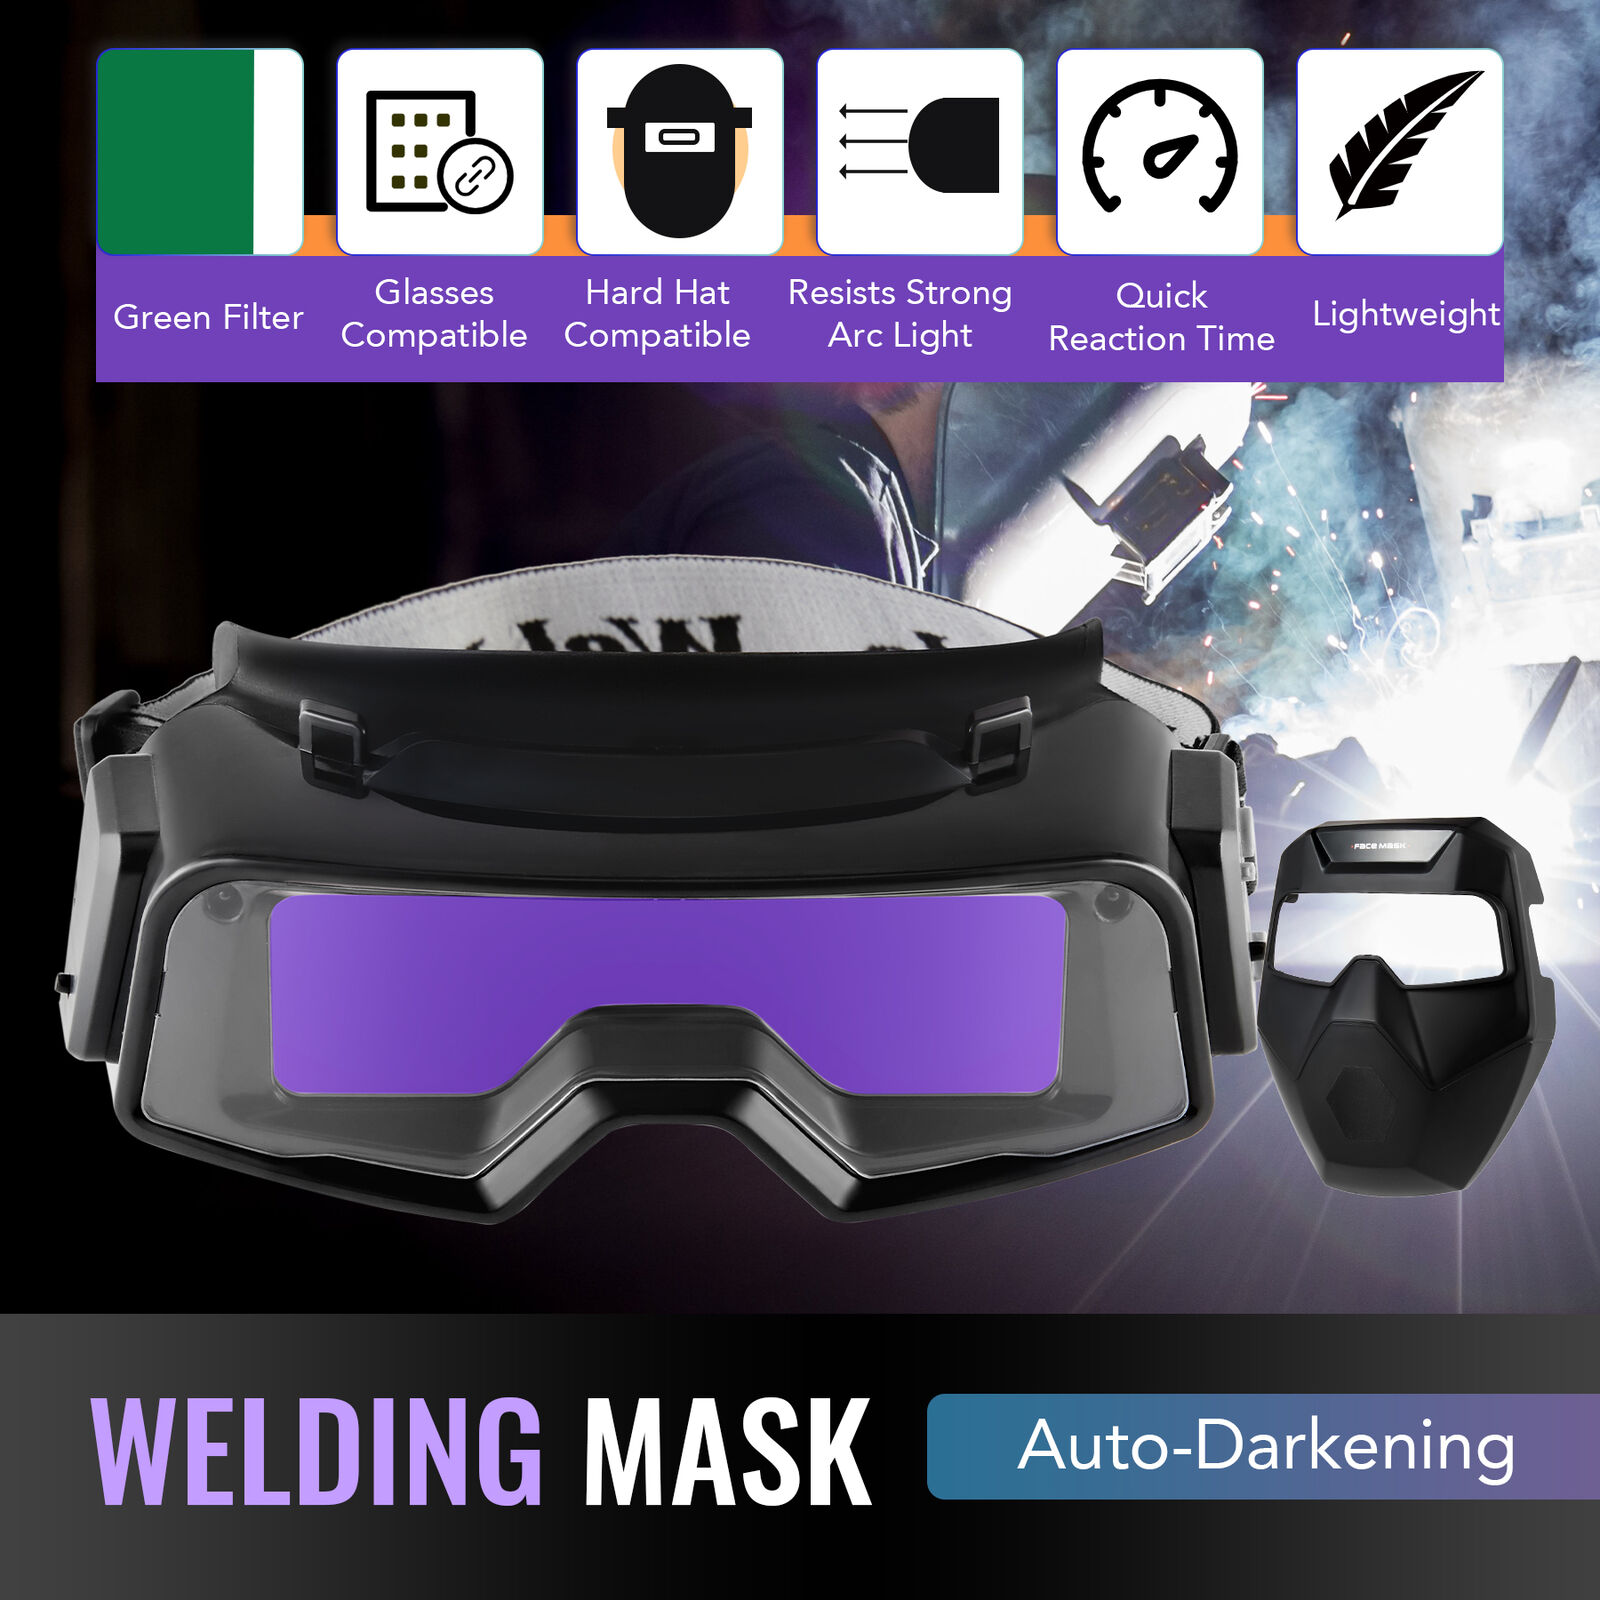 Auto Darkening Welding Helmet W Detachable Goggles For Welding Grinding Cutting